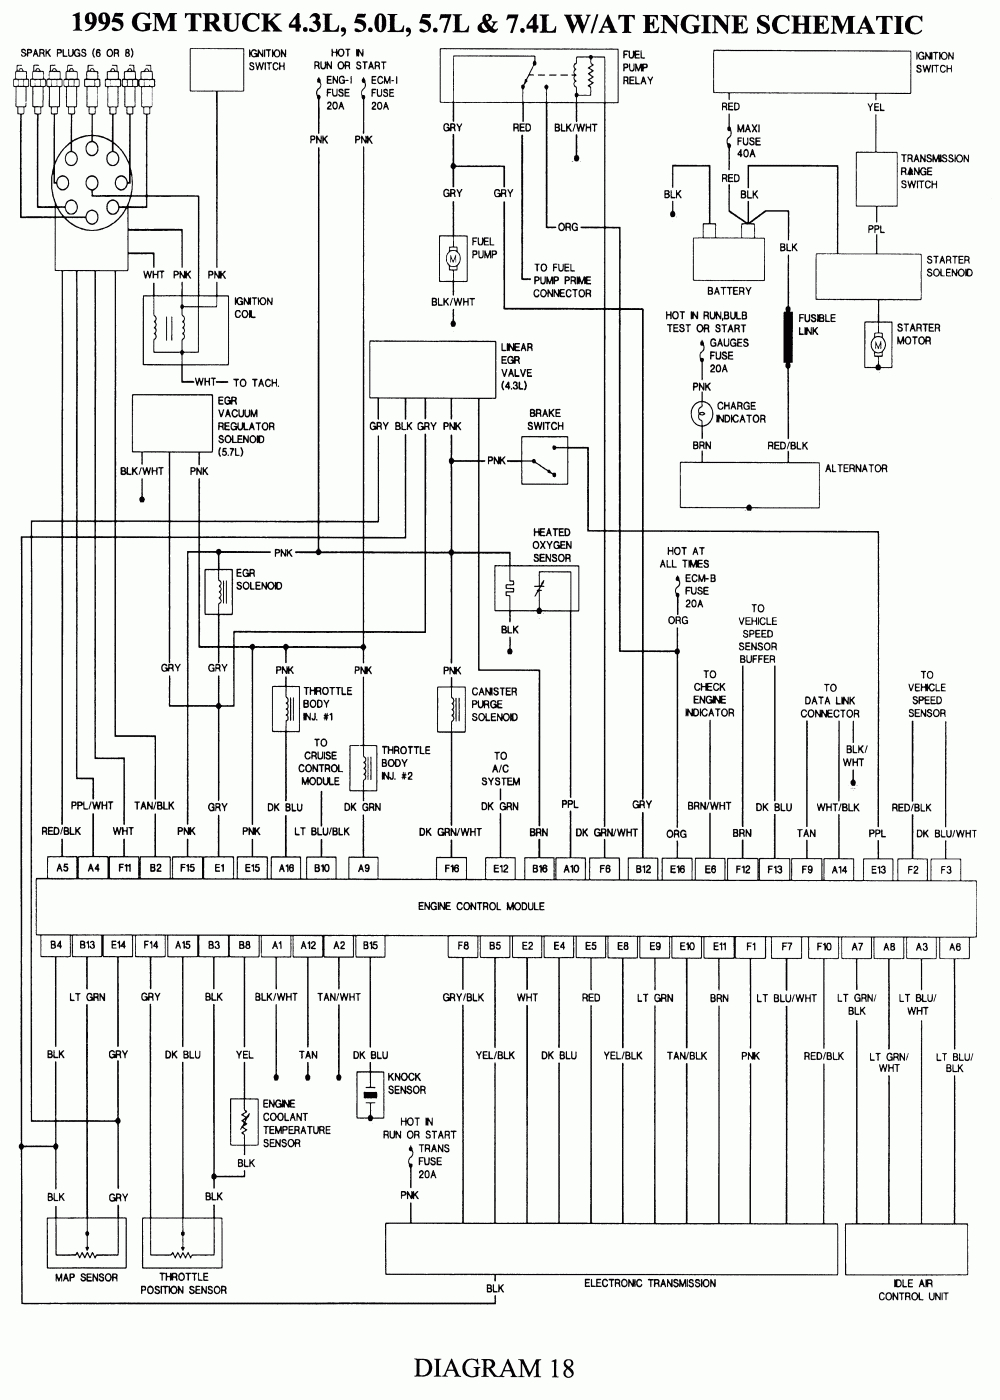 2006 Chevy Diesel Wiring Diagram | Wiring Library - 2004 Silverado Bose Amp Wiring Diagram